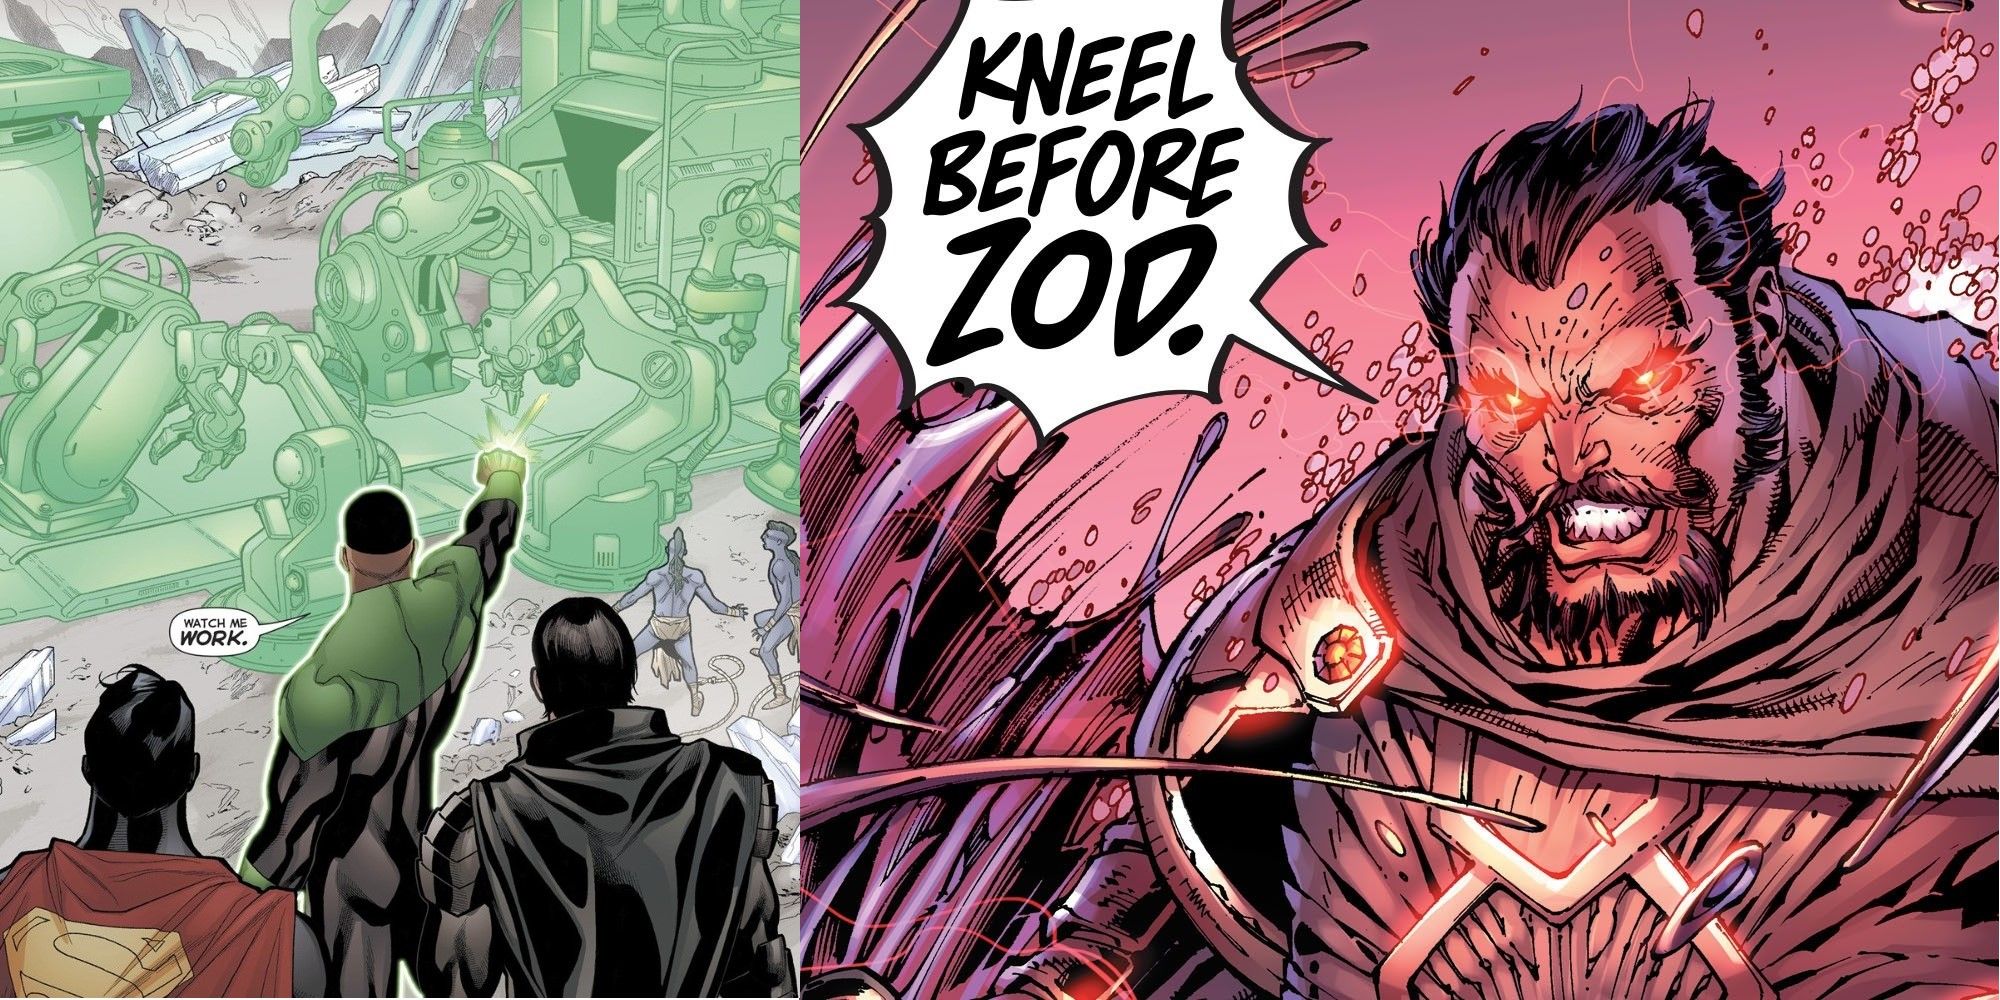 Green Lantern building the teleportation disruptor using Zod's blueprints